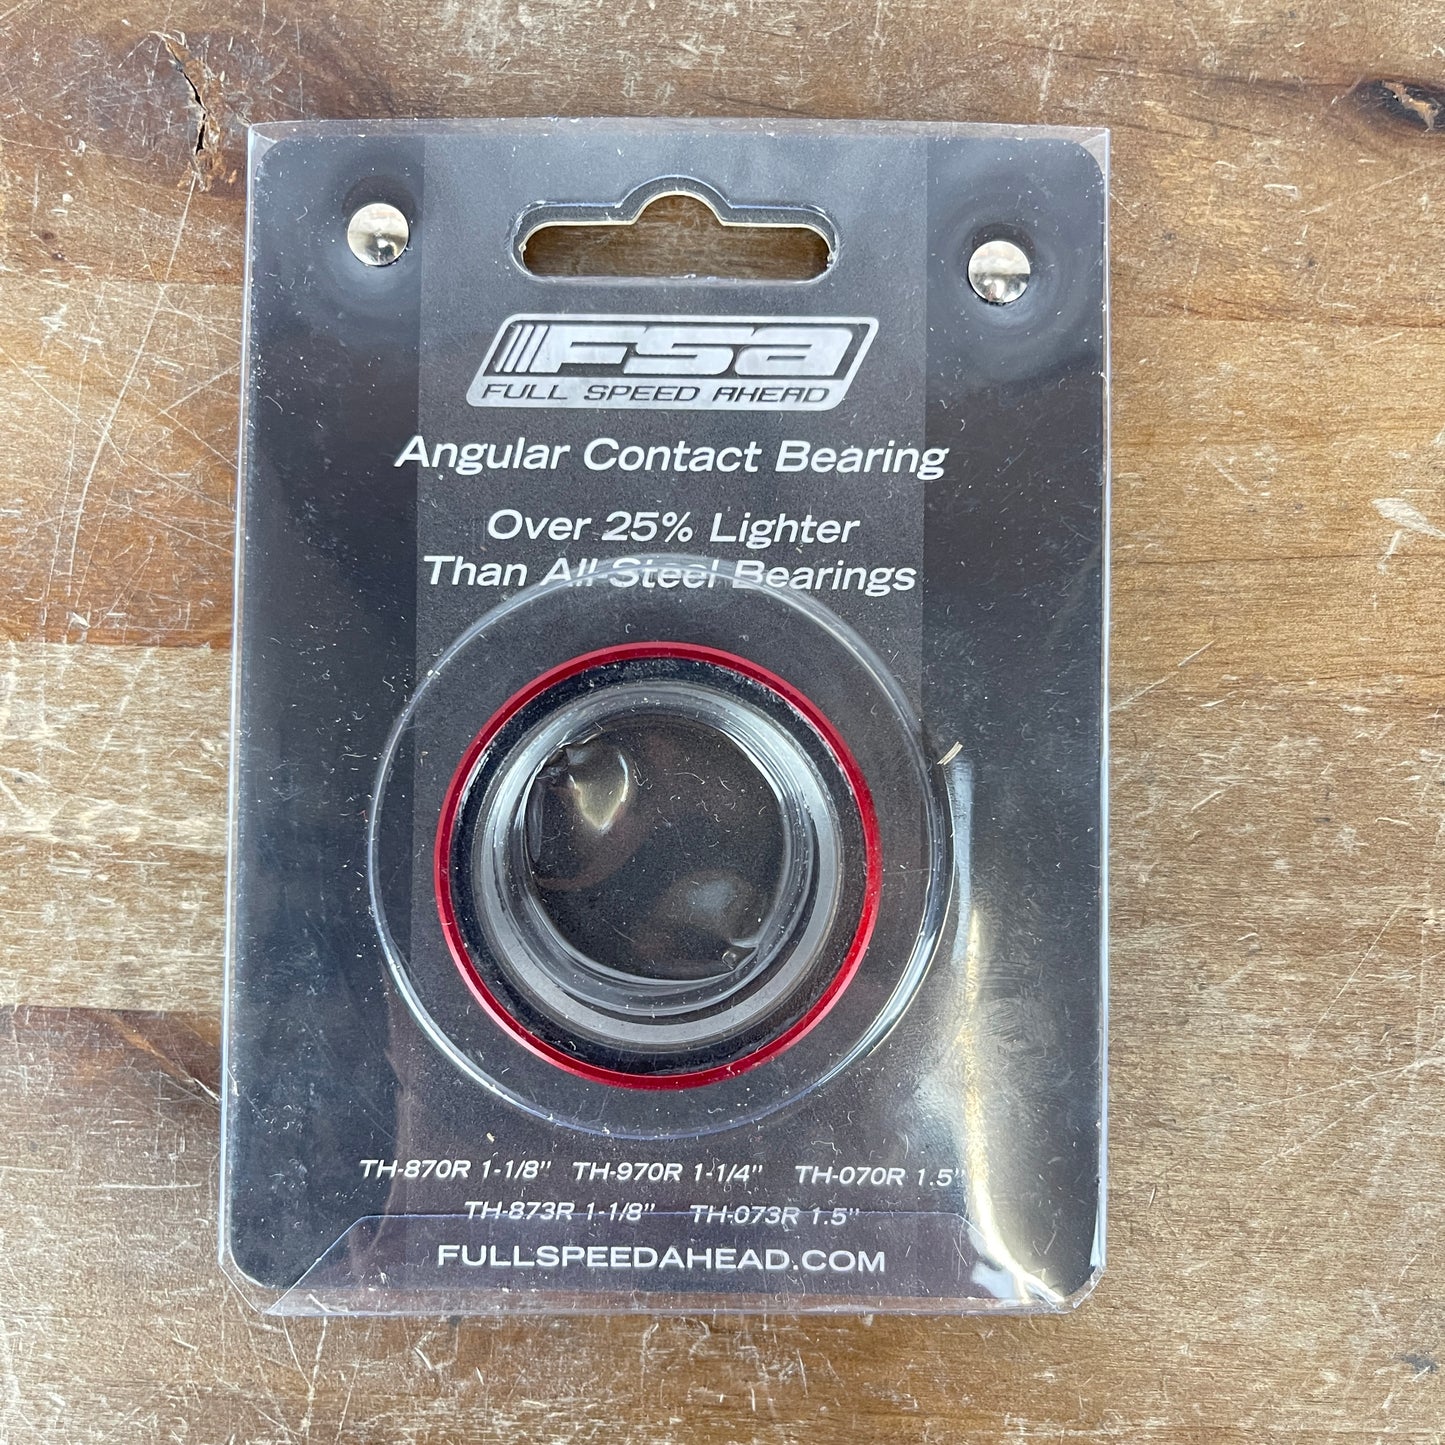 FSA TH-870R 1-1/8" Angular Contact Bearing Red Road Bike Headset 15g